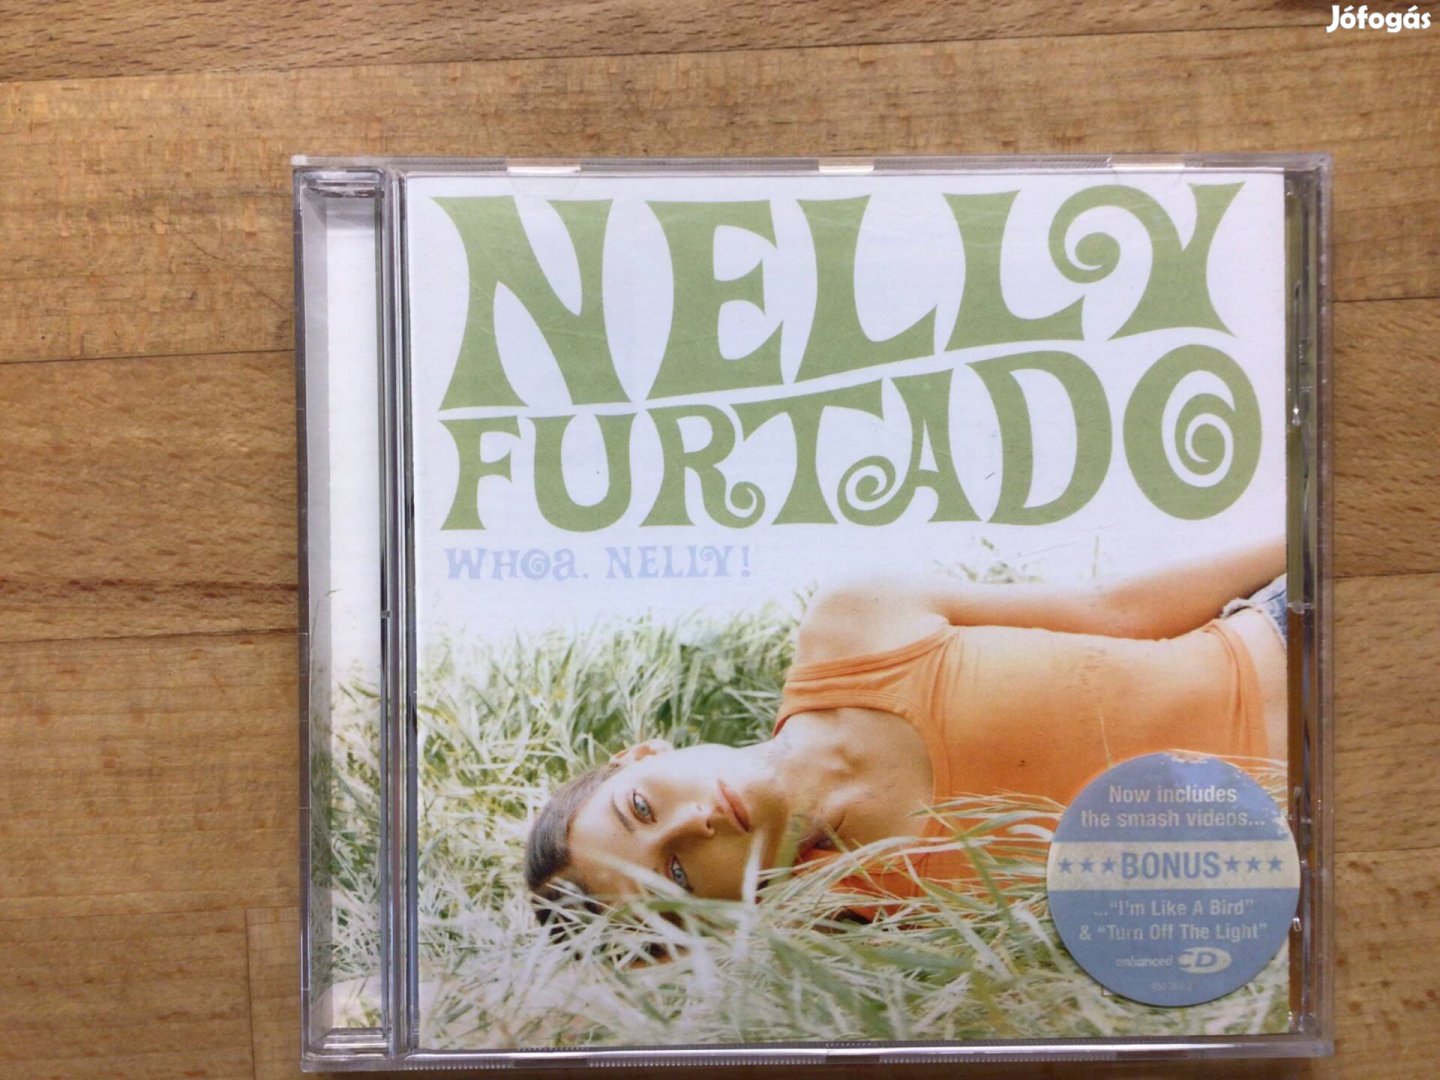 Nelly Furtado - Whoa, Nelly!